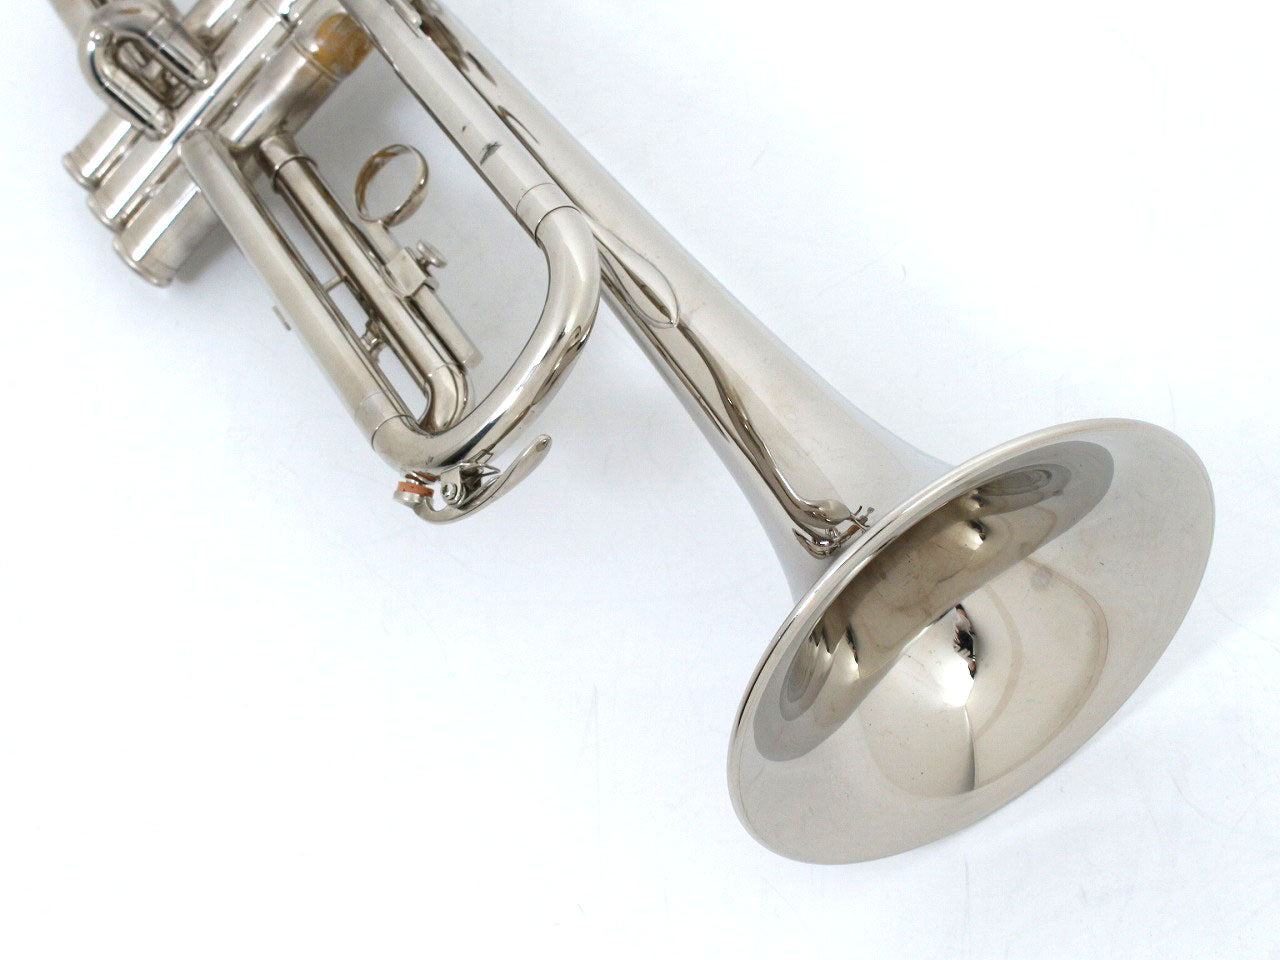 [SN 007596] USED YAMAHA / Trumpet YTR-1310 Nickel plated finish [20]